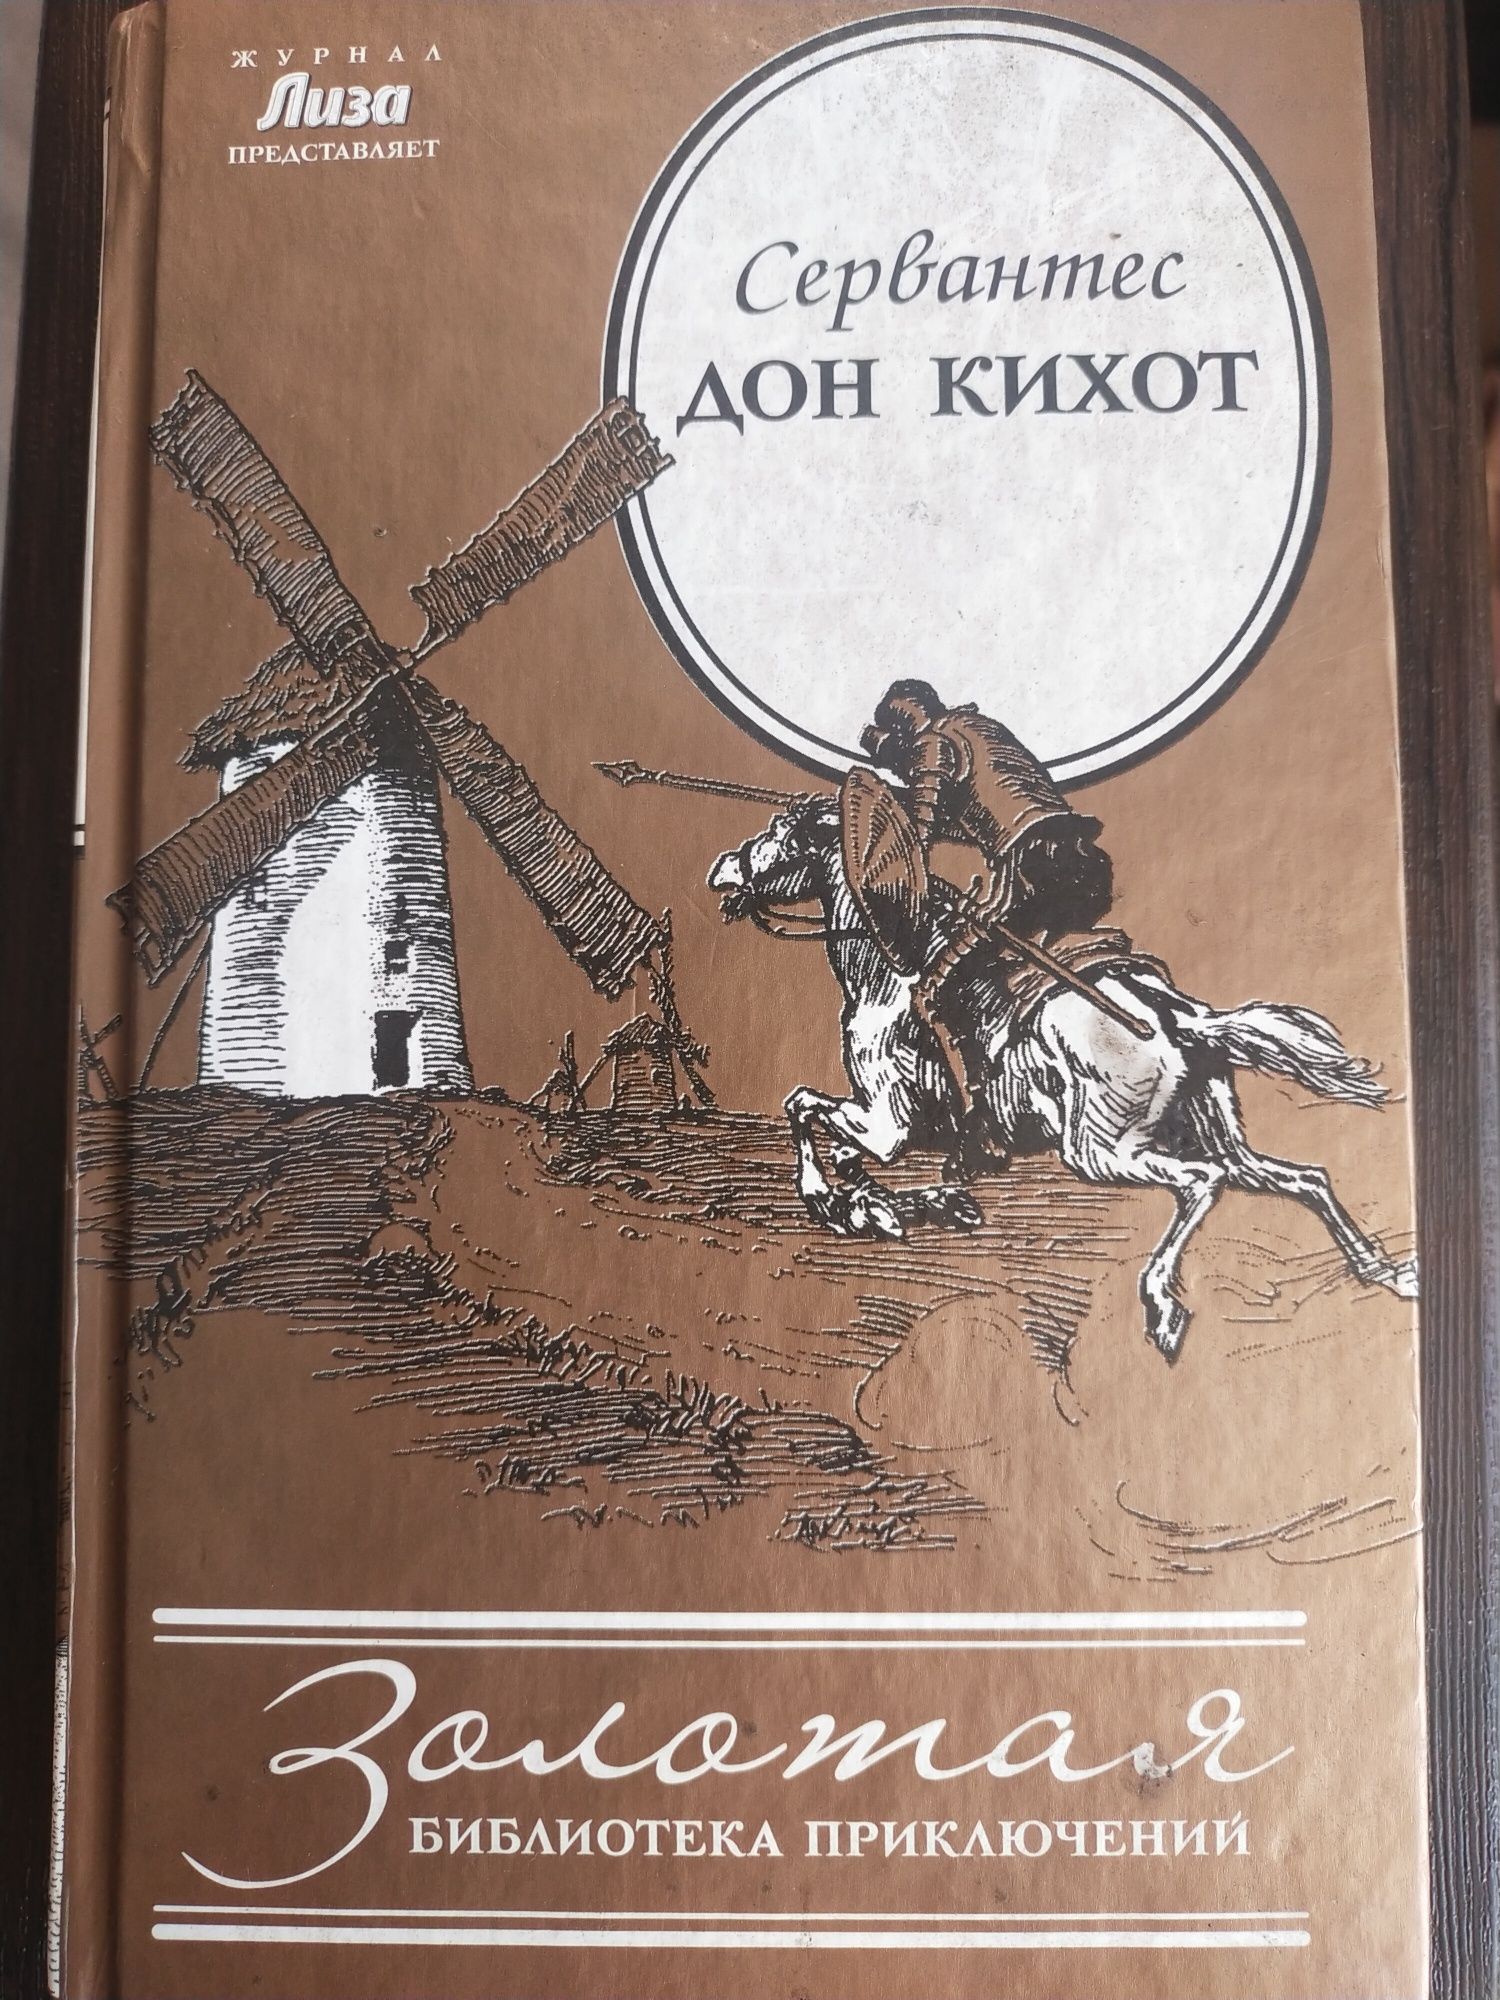 Книга ДОН КИХОТ (Золотая библиотека приключений)